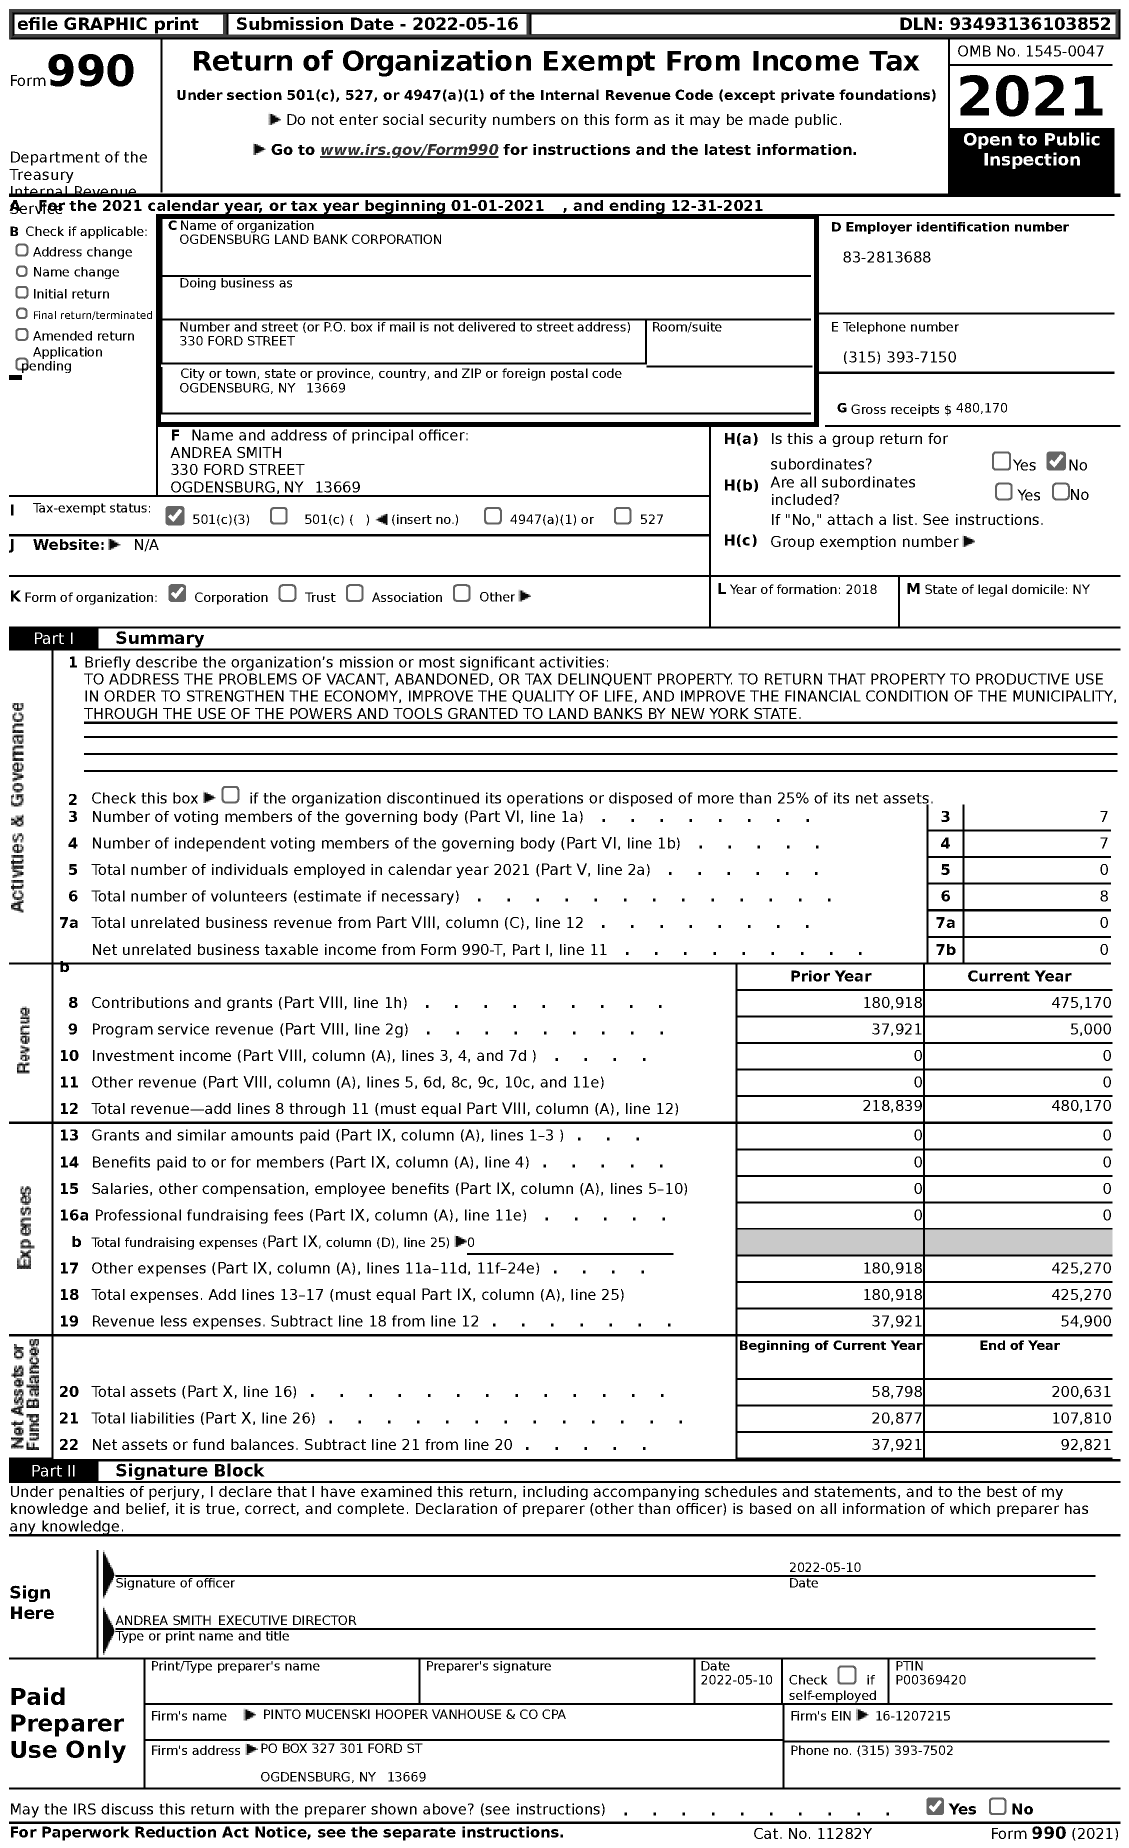 Image of first page of 2021 Form 990 for Ogdensburg Land Bank Corporation